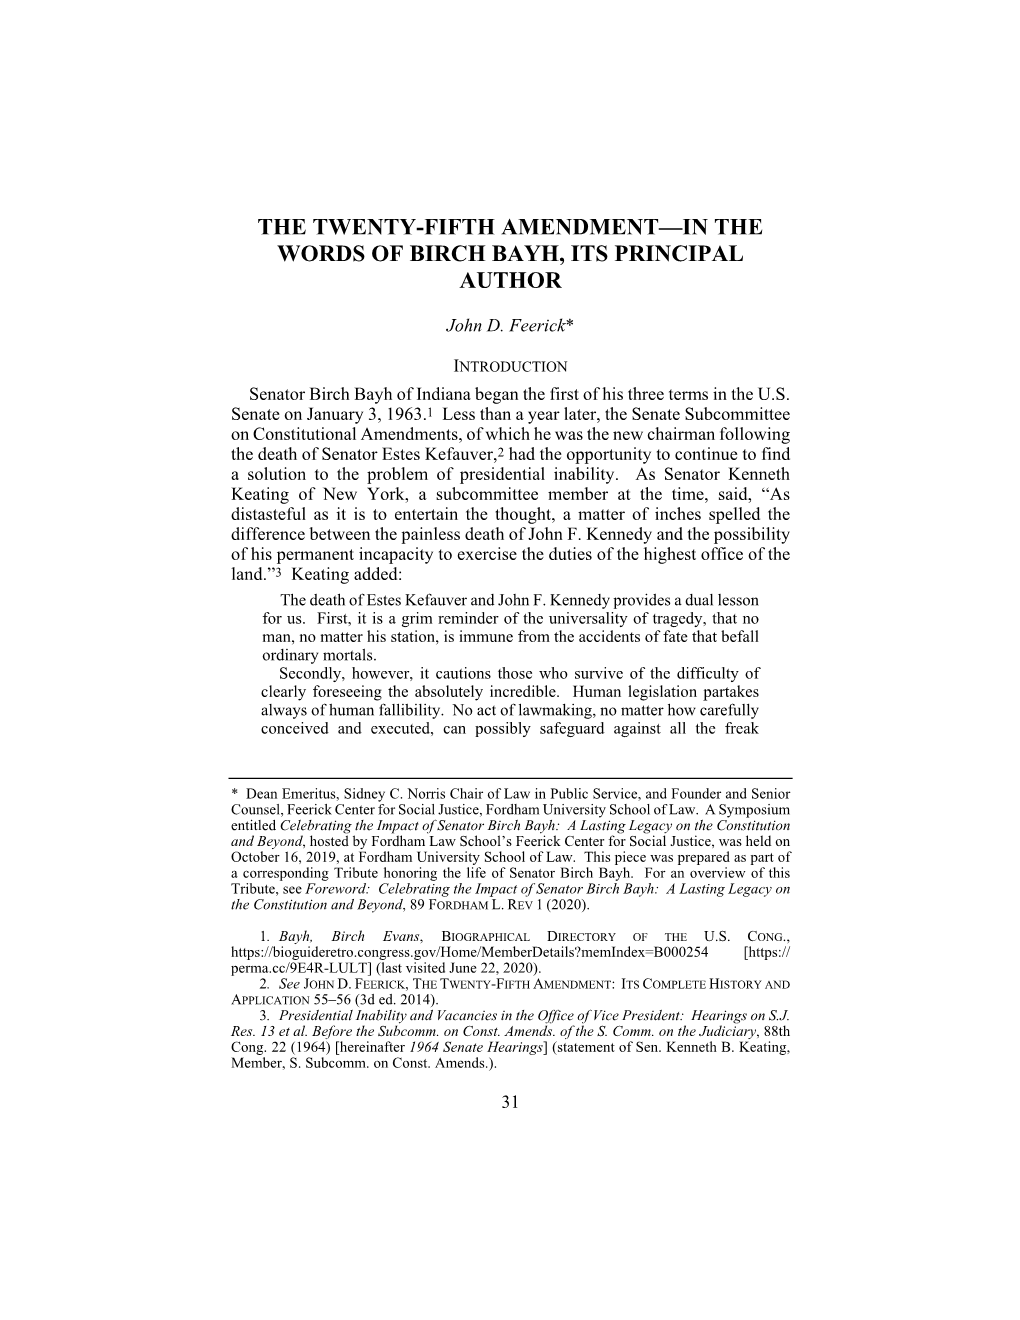 The Twenty-Fifth Amendment—In the Words of Birch Bayh, Its Principal Author